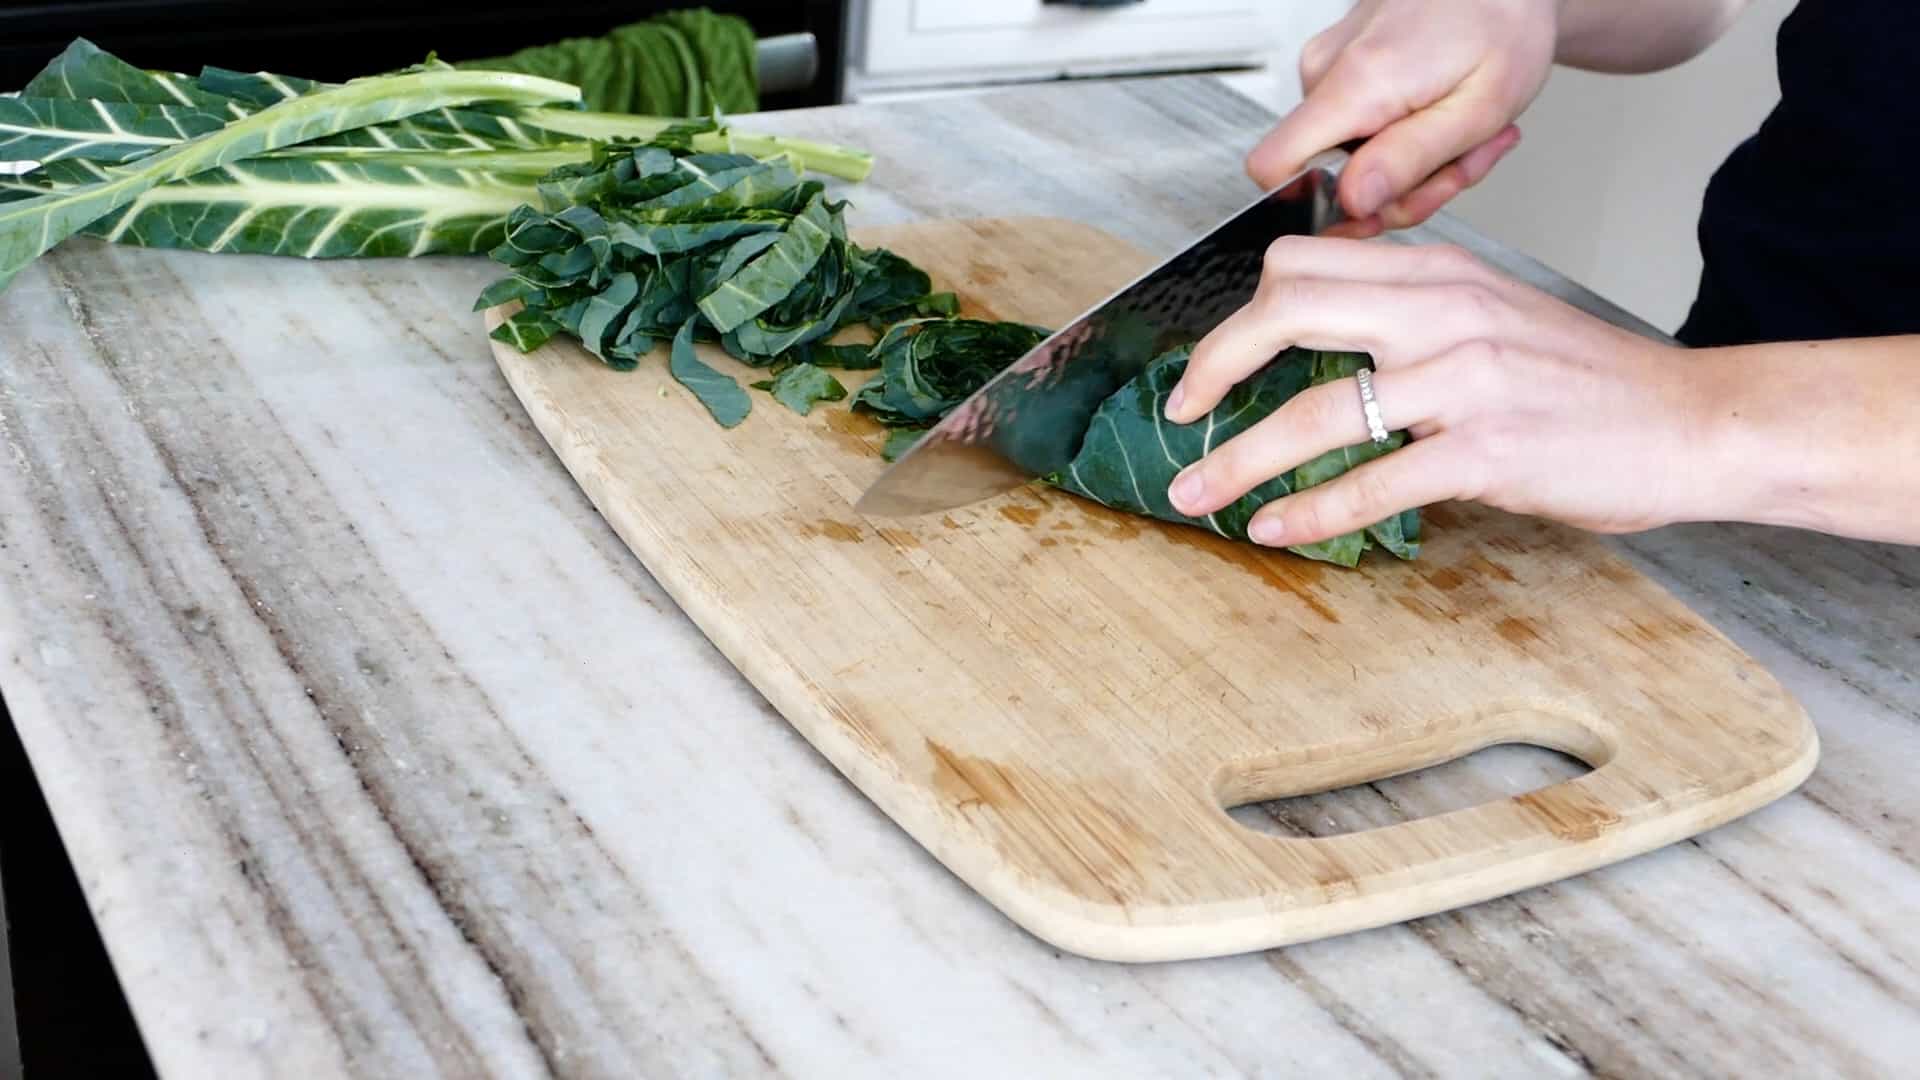 woman cutting collard greens into thin strips on a cutting board